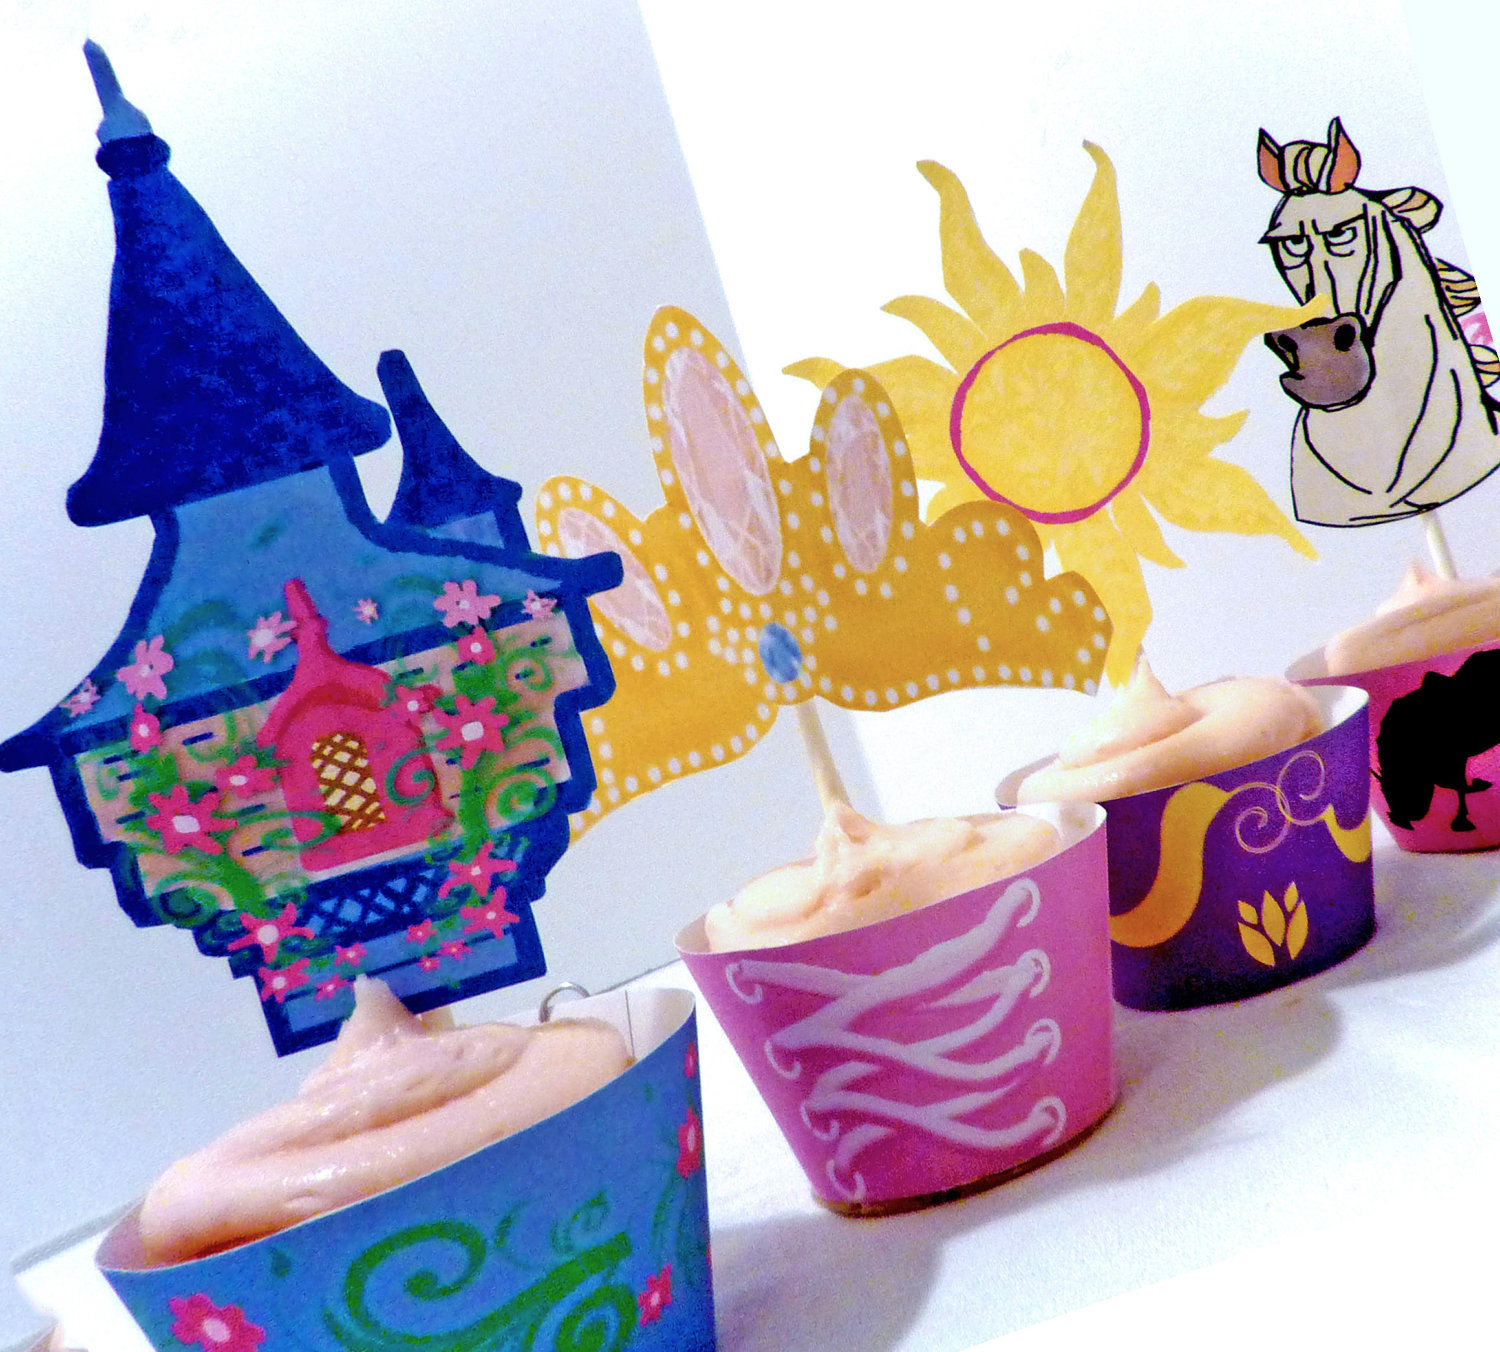 Rapunzel Birthday Party Decorations
 Instant Download Printable DIY Rapunzel Party Decorations